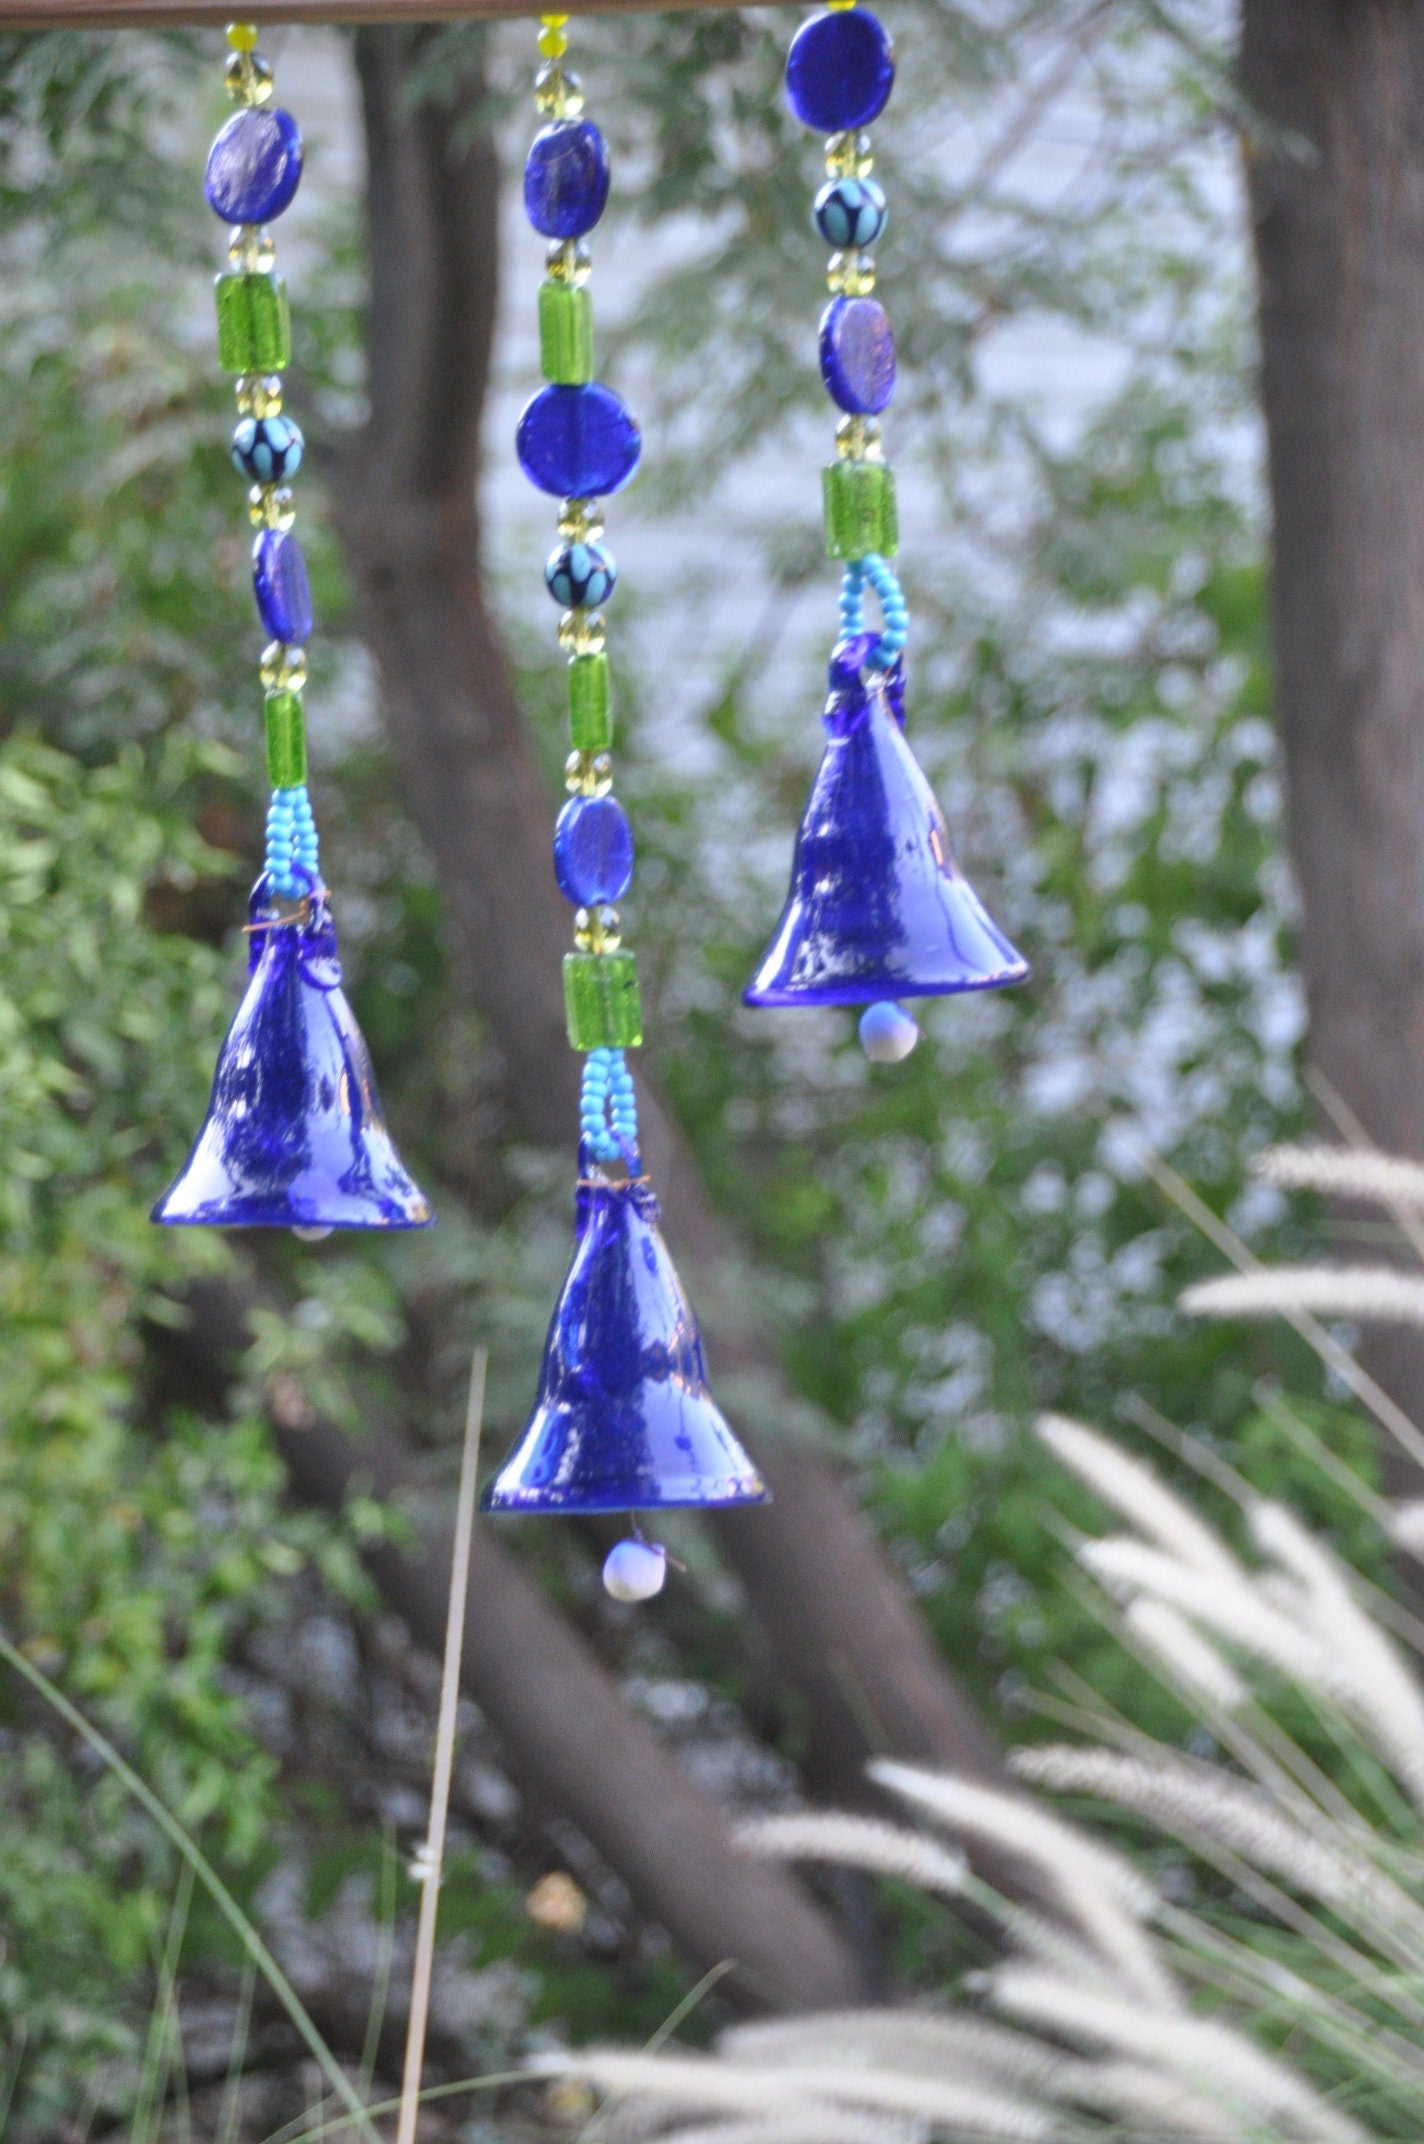 Three Blue Glass-Blown Bells On Beaded String